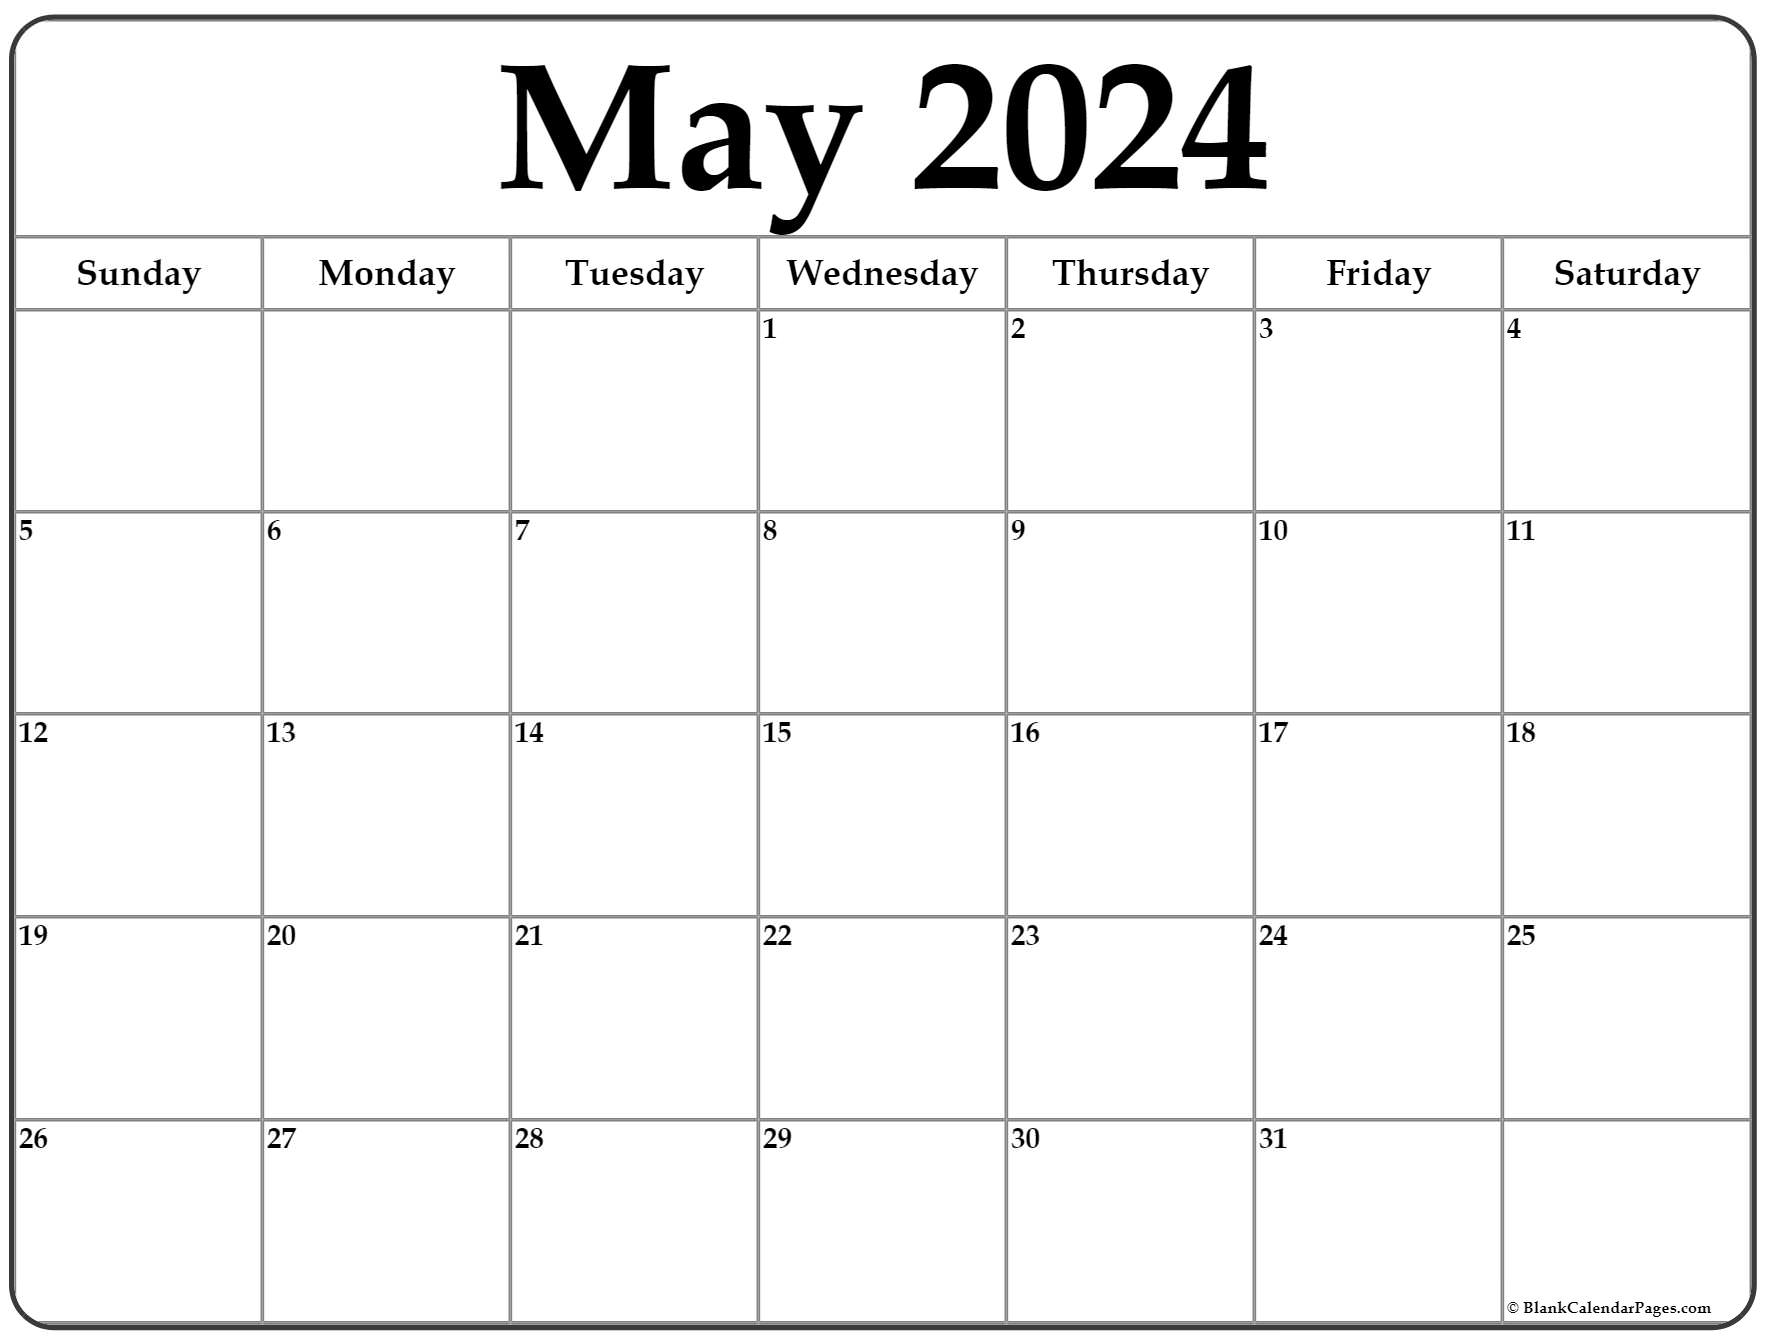 Free Printable May Calendar 2022 May 2022 Calendar | Free Printable Calendar Templates